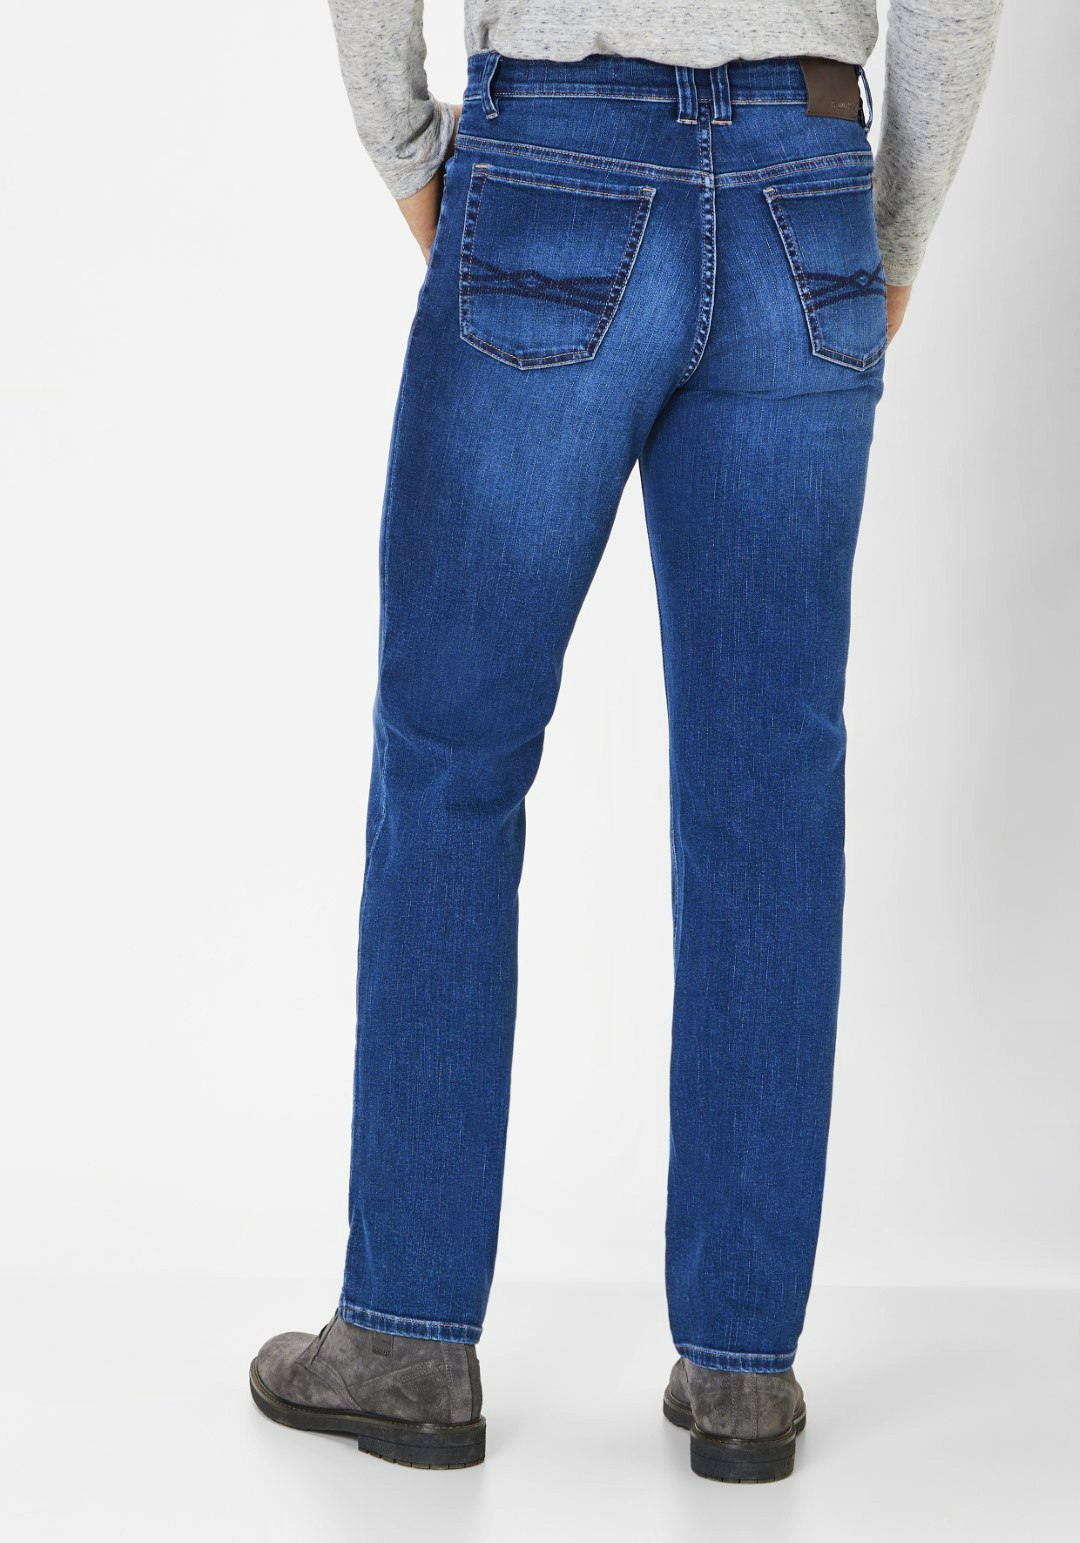 Paddock's Ranger Jeans Slim Fit blue/dark 